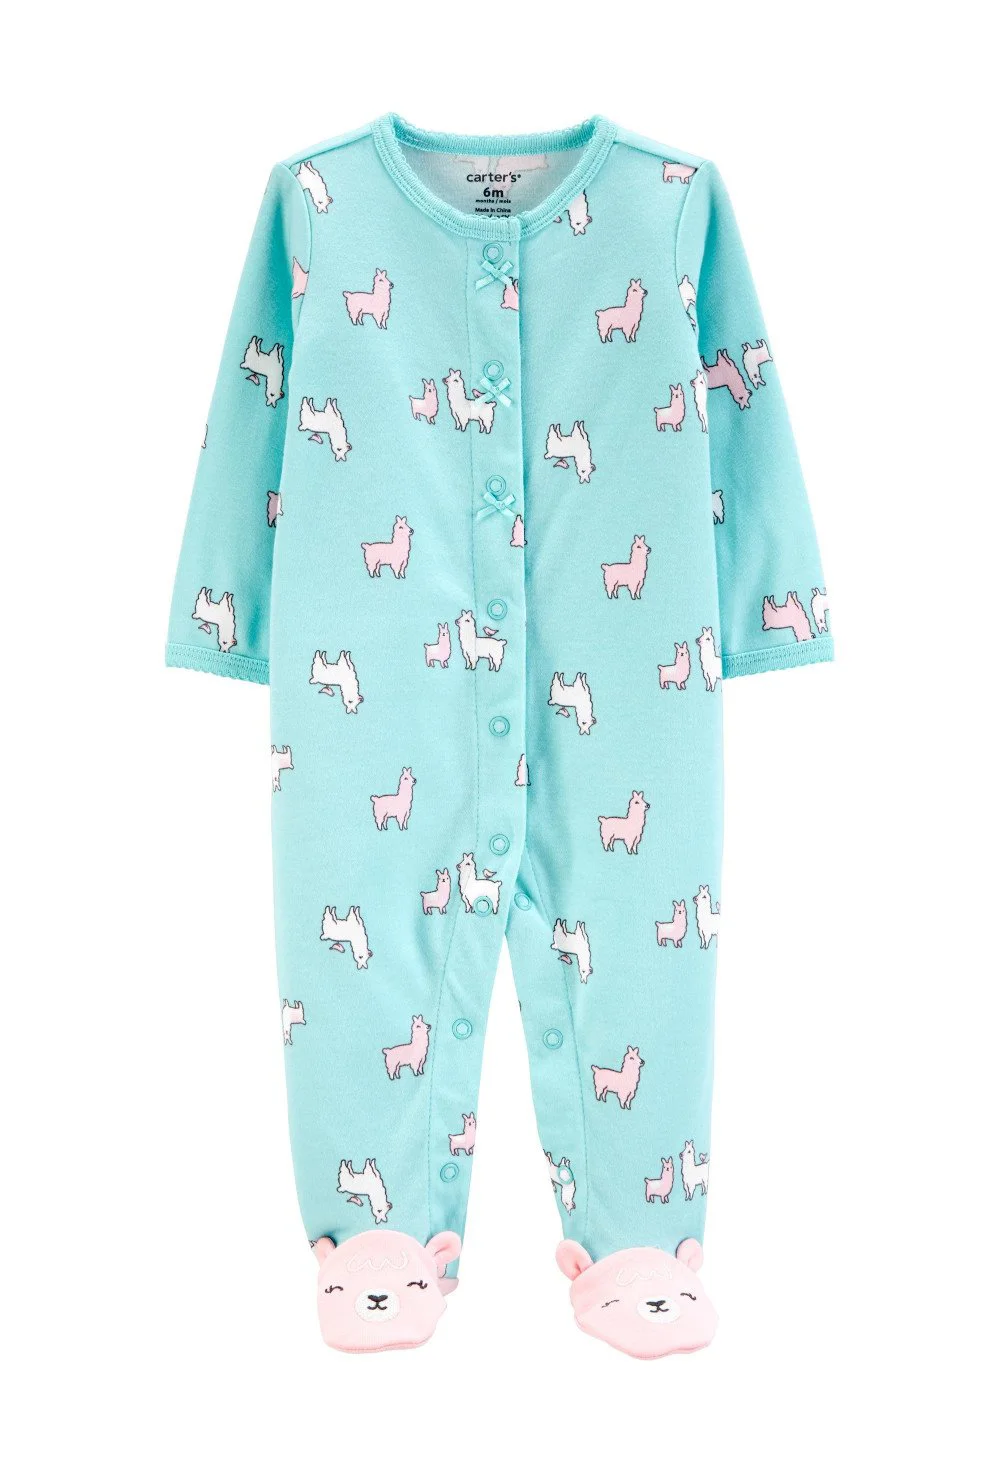 Carter's Pijama bebe Lama